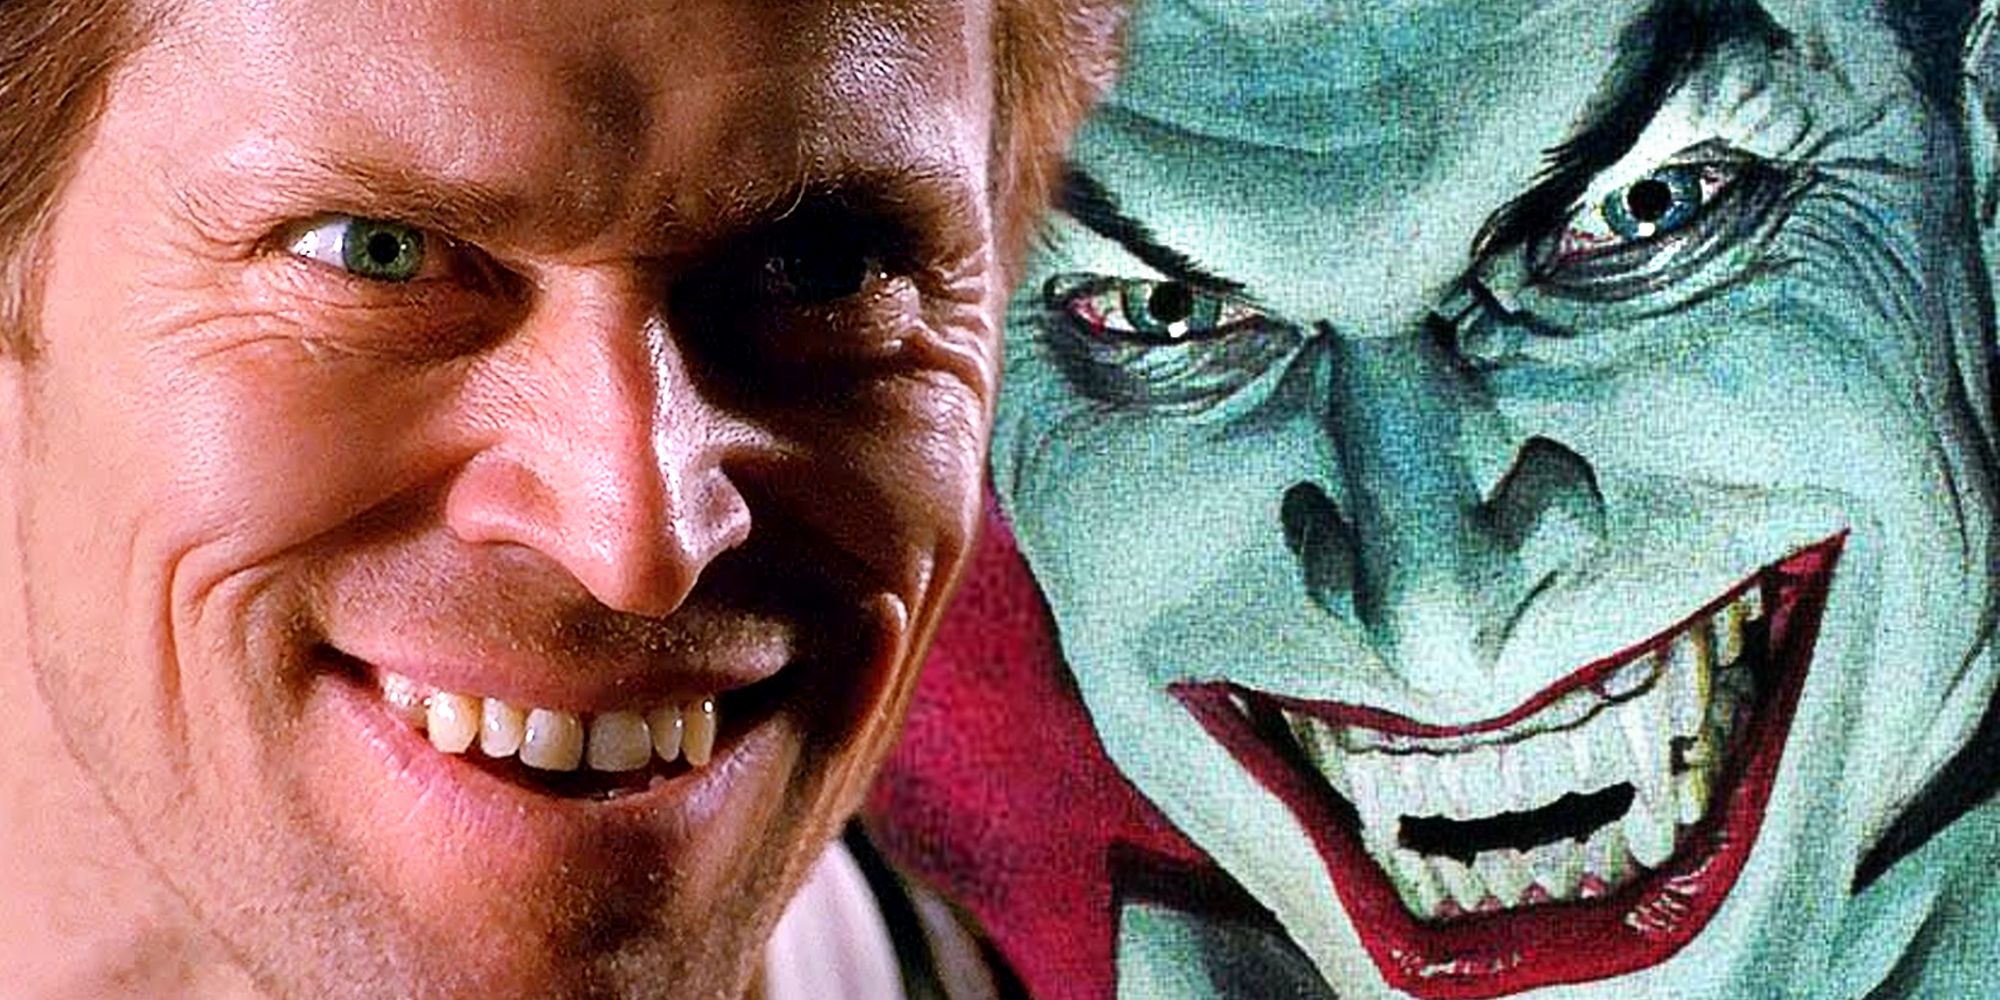 Willem Dafoe as Green Goblin and The Joker